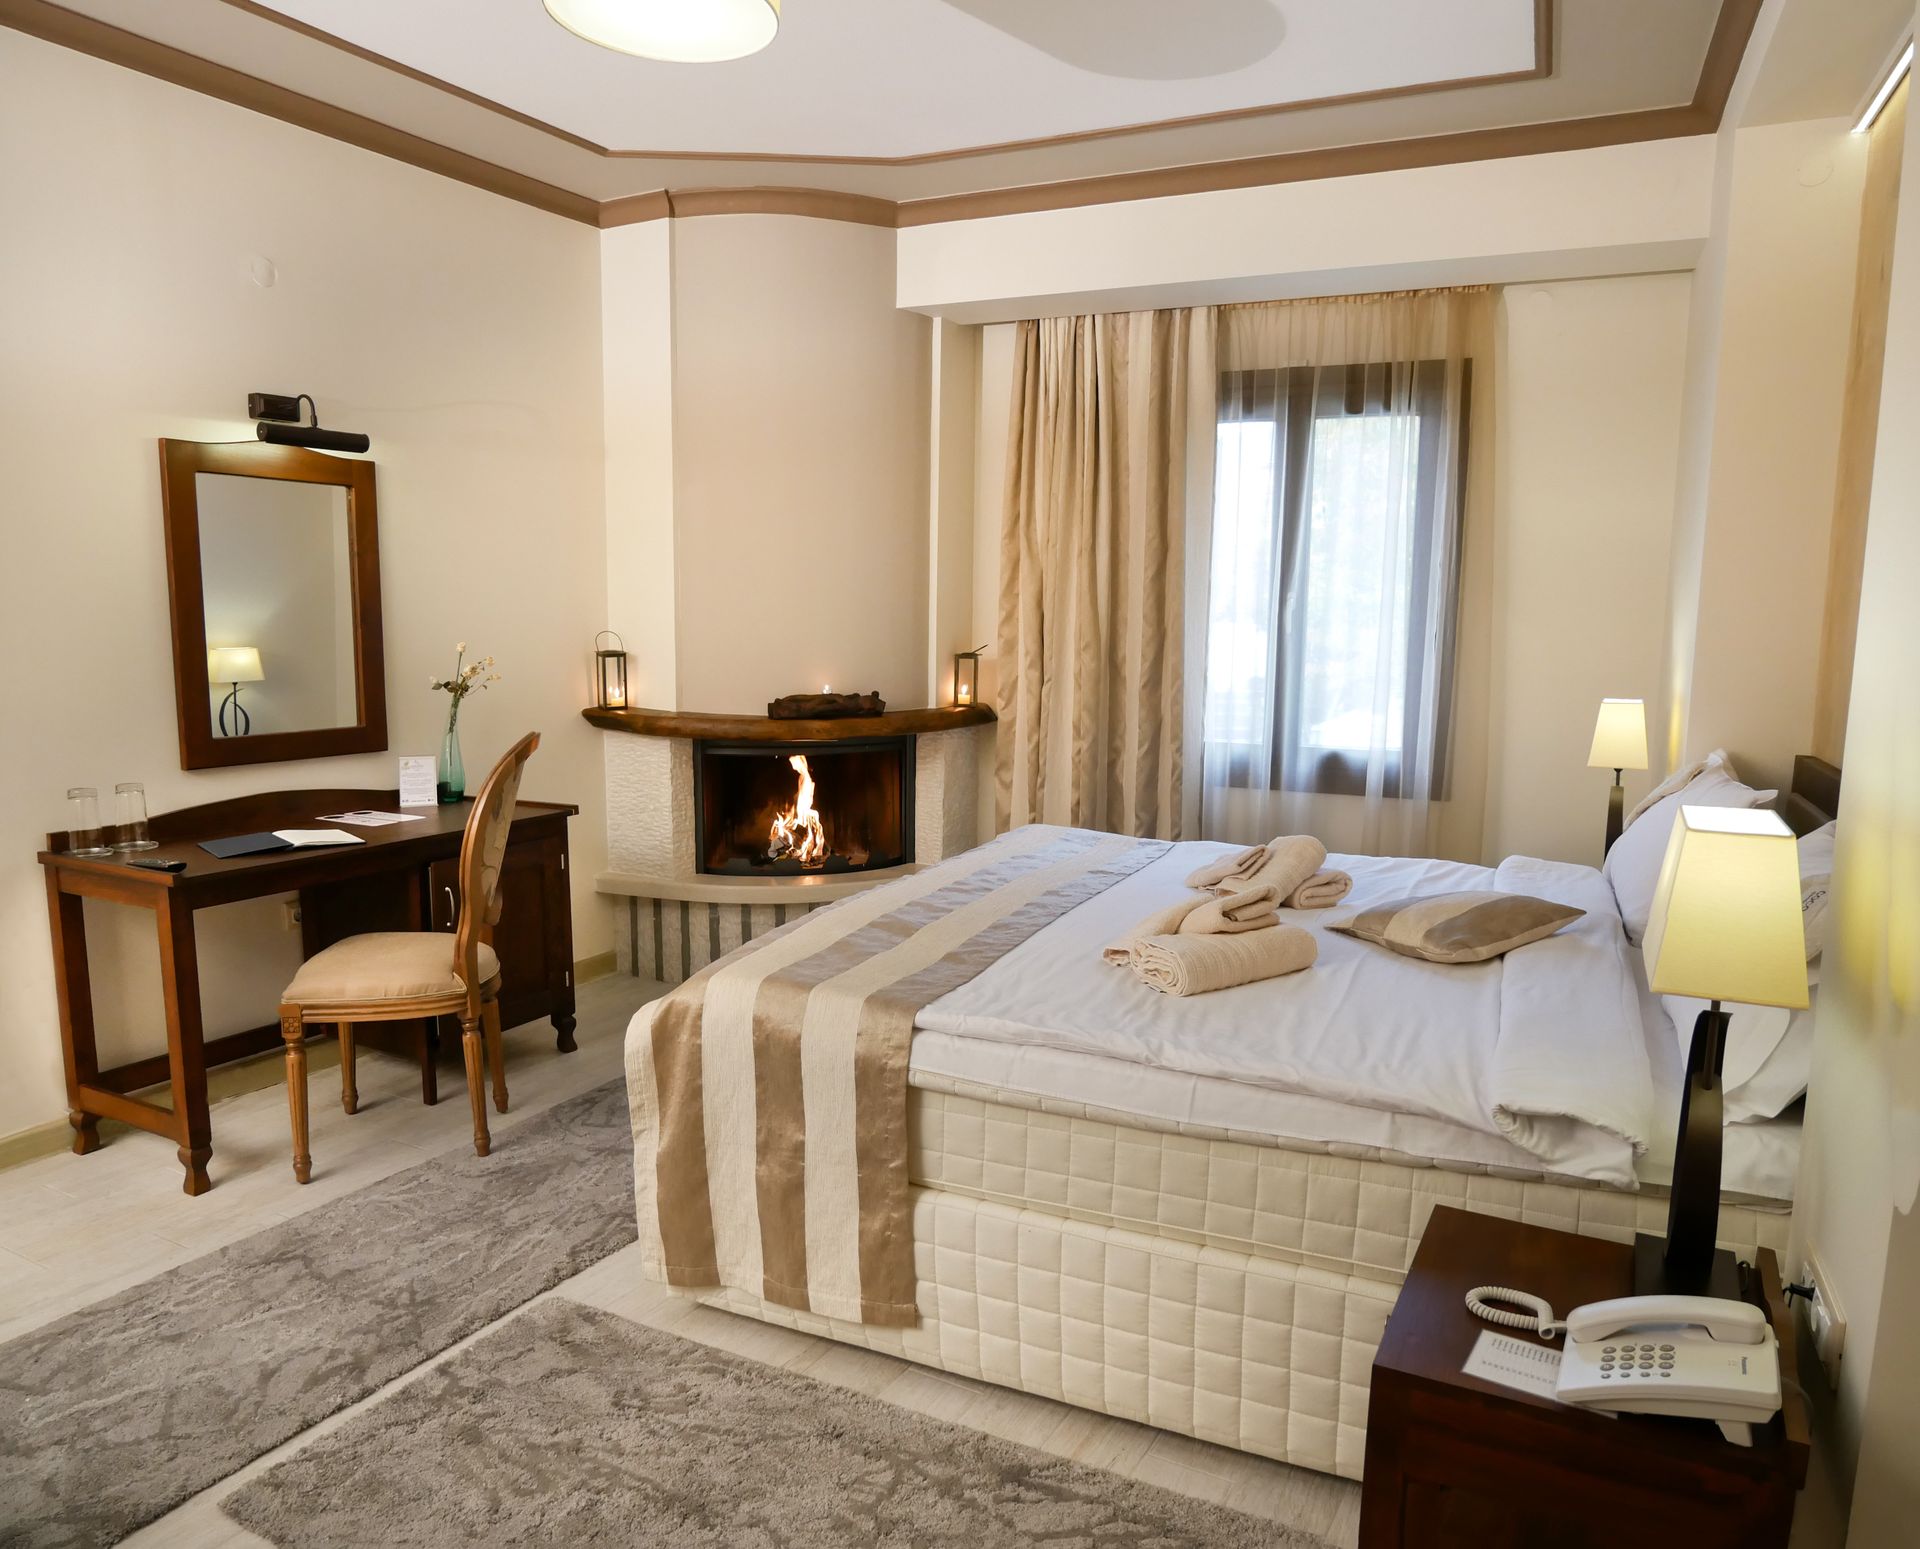 Rodovoli Hotel Konitsa - Κόνιτσα ✦ 5 Ημέρες (4 Διανυκτερεύσεις)